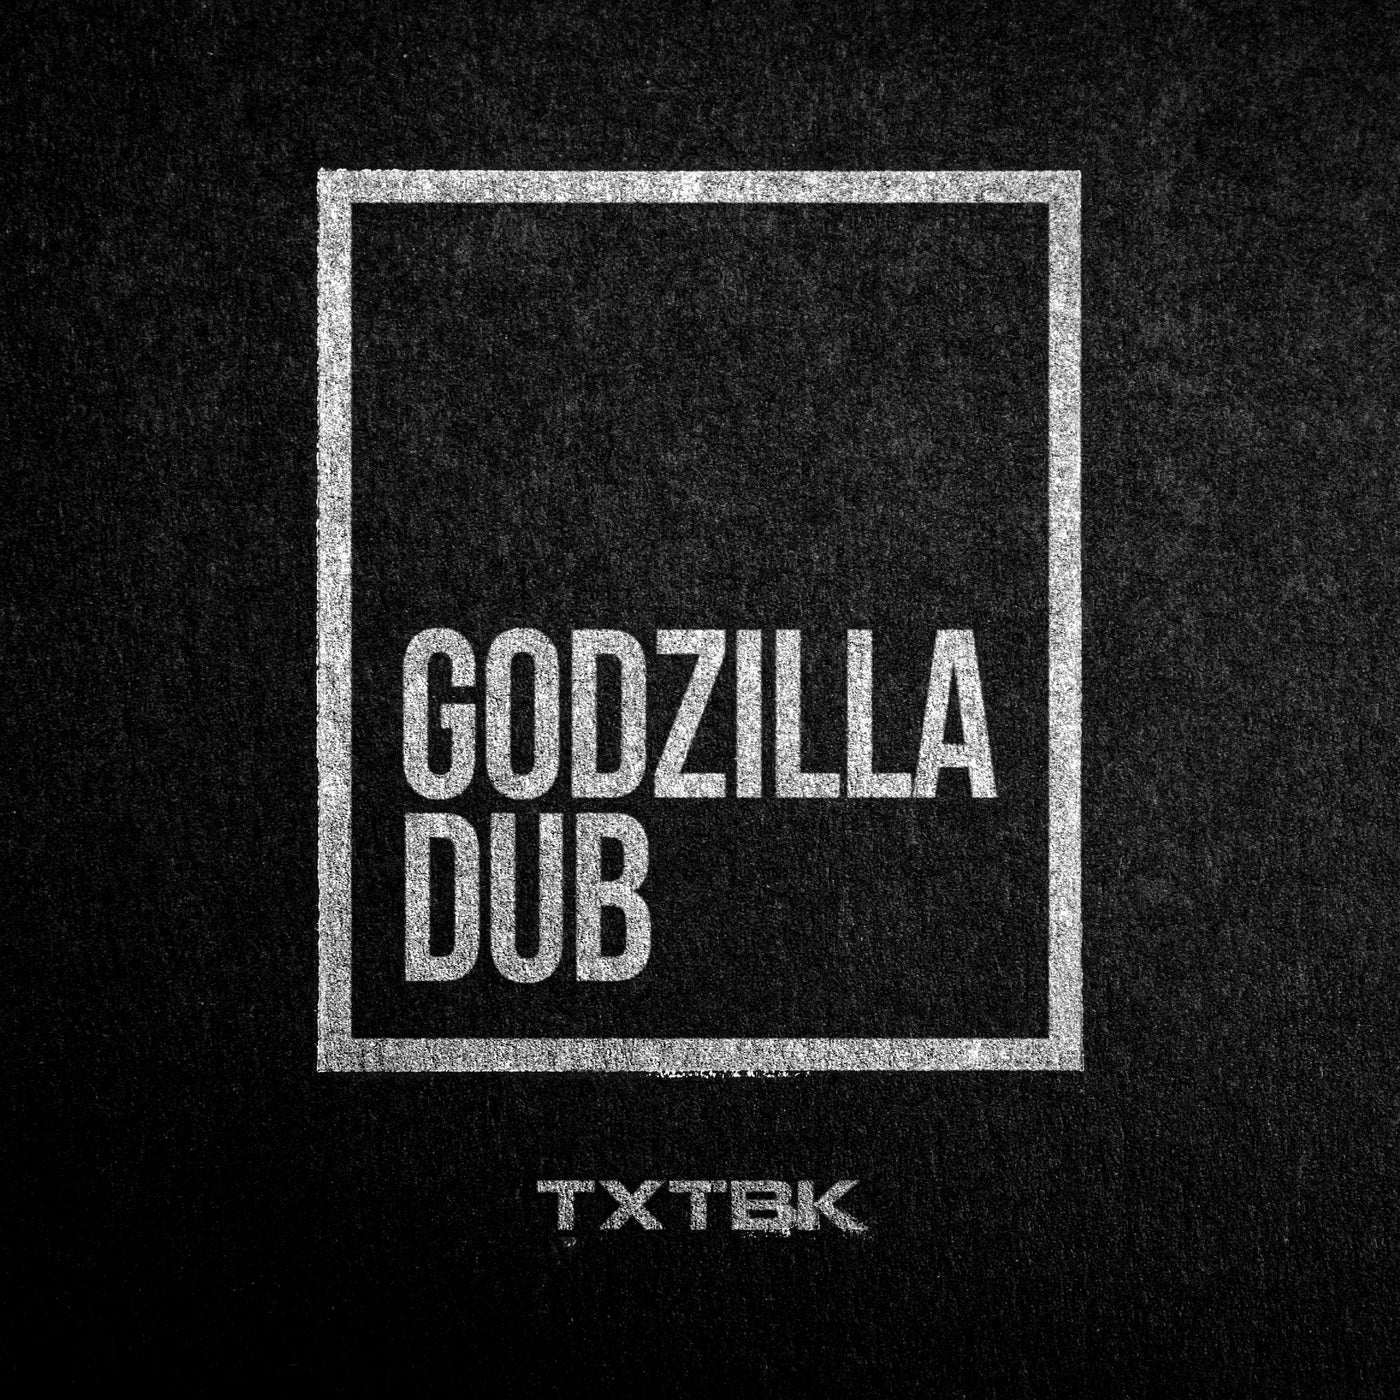 Godzilla Dub